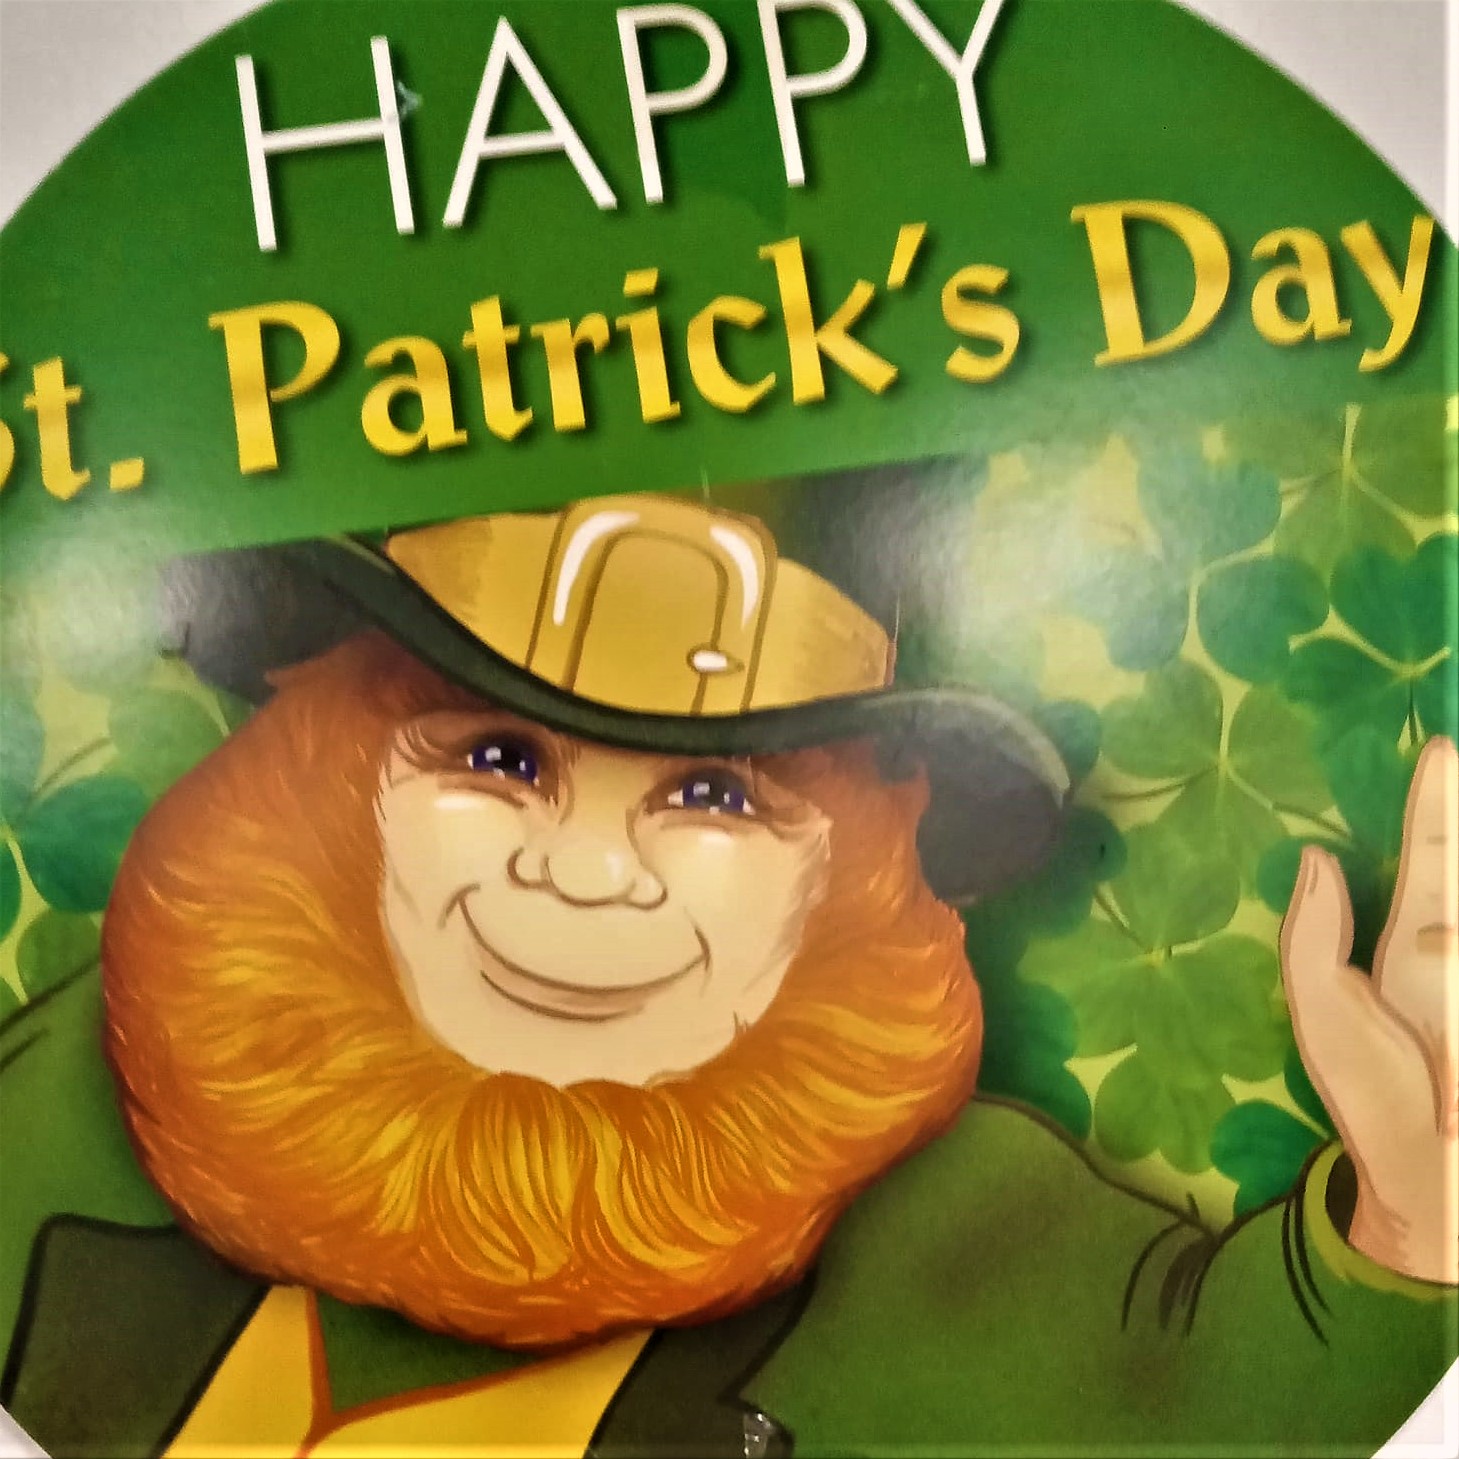 North Inch - St Patrick's Day sticker